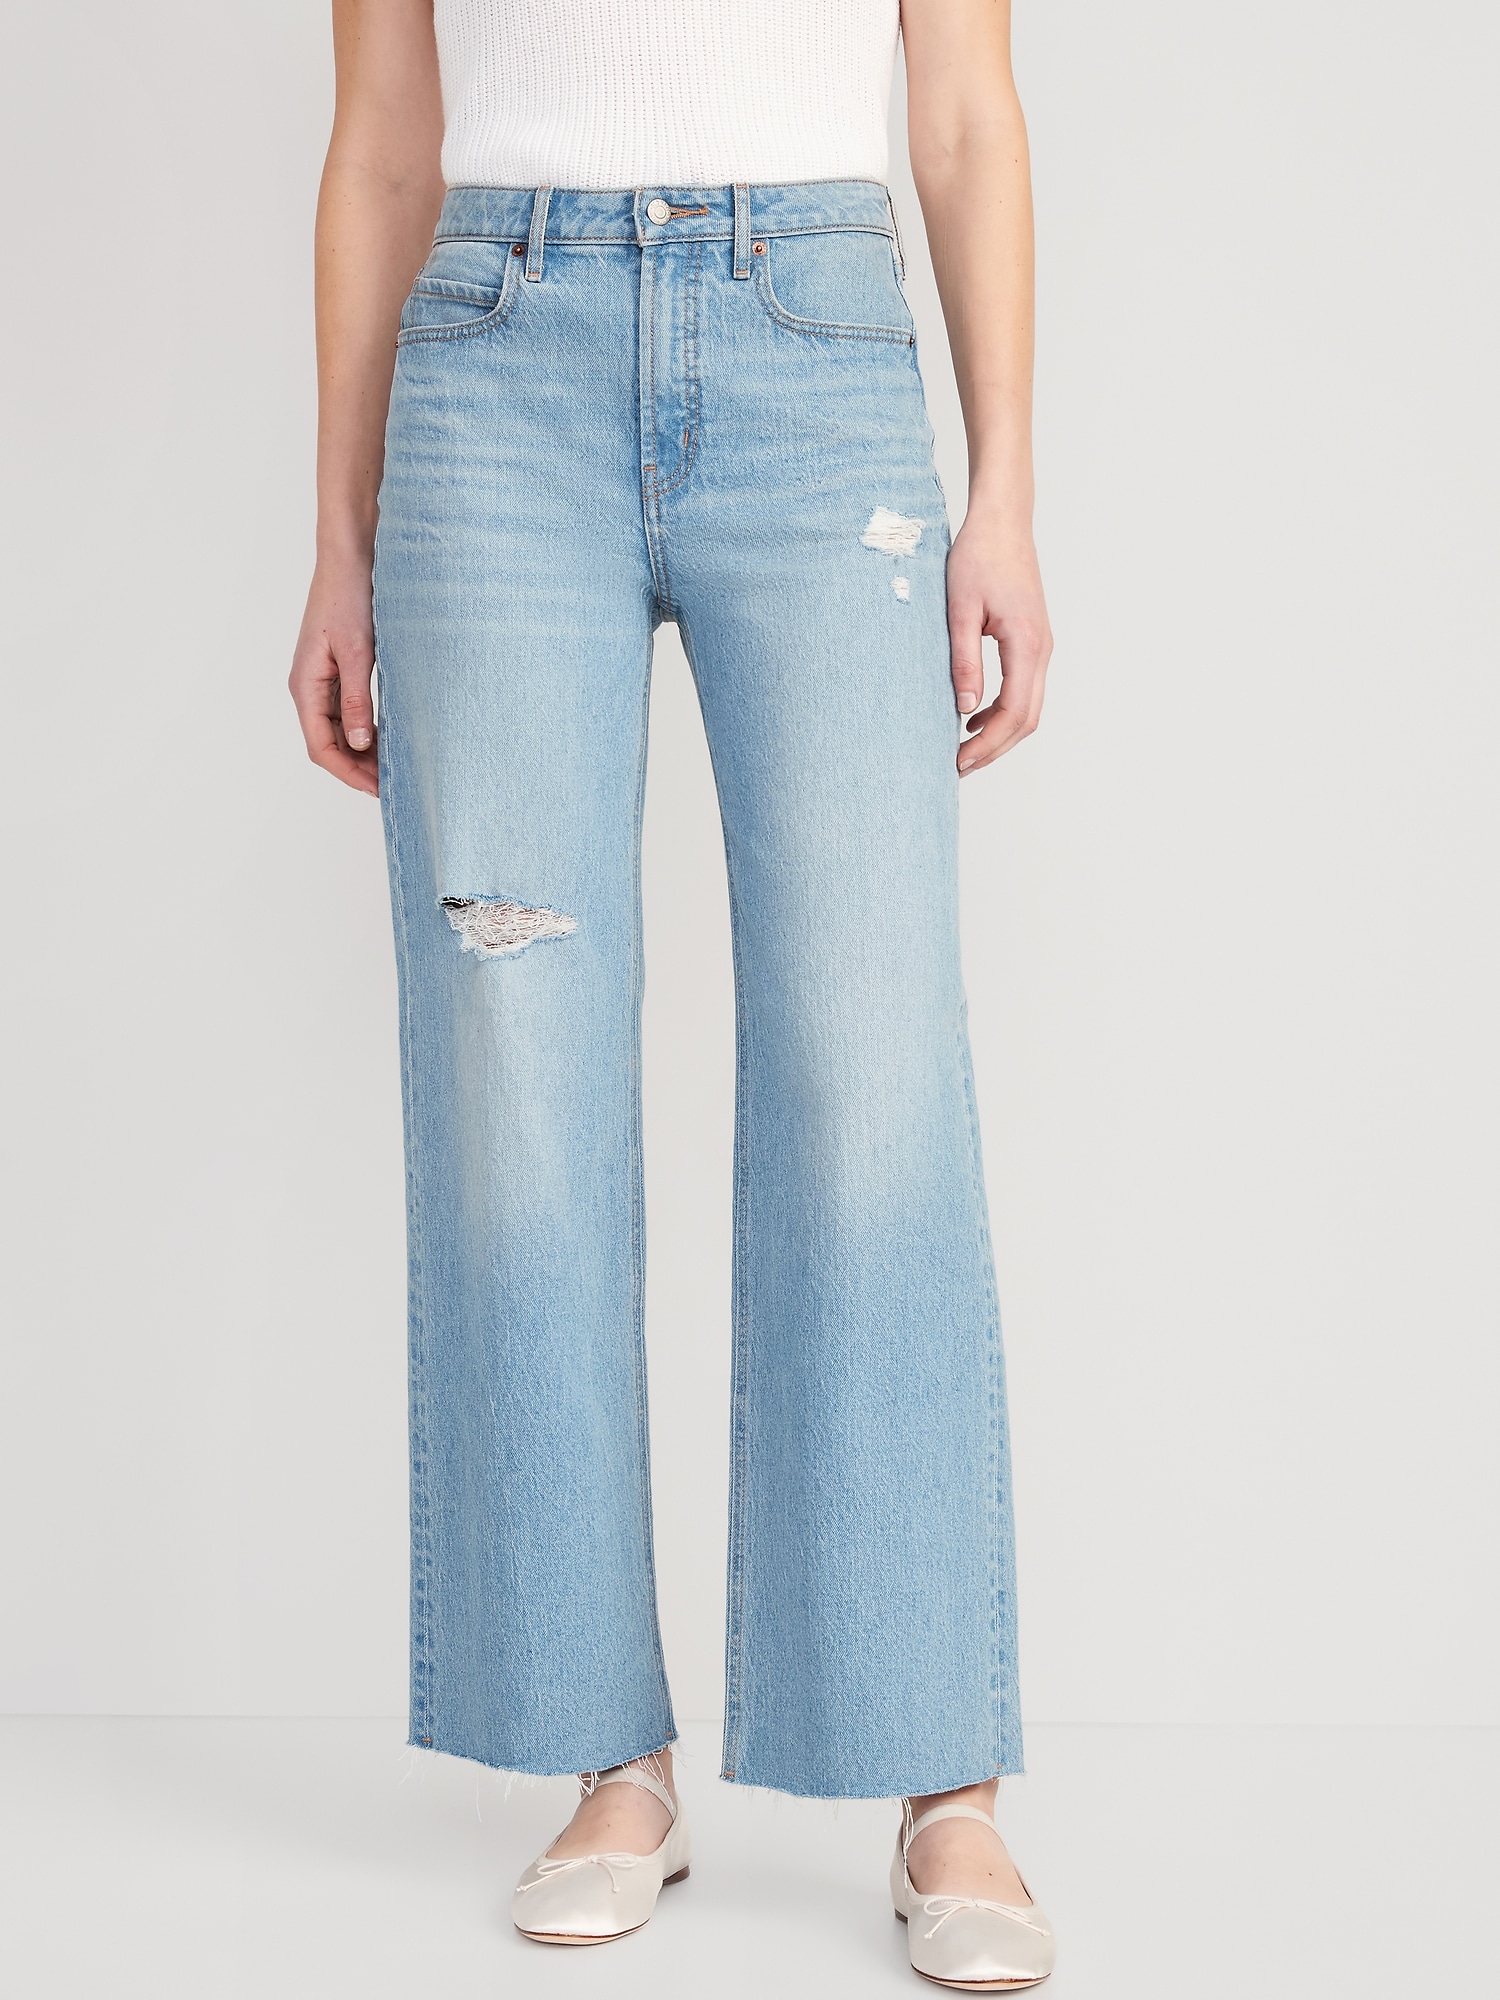 Ripped Jeans Women Ankle Length Capri Pants High Stretch Denim